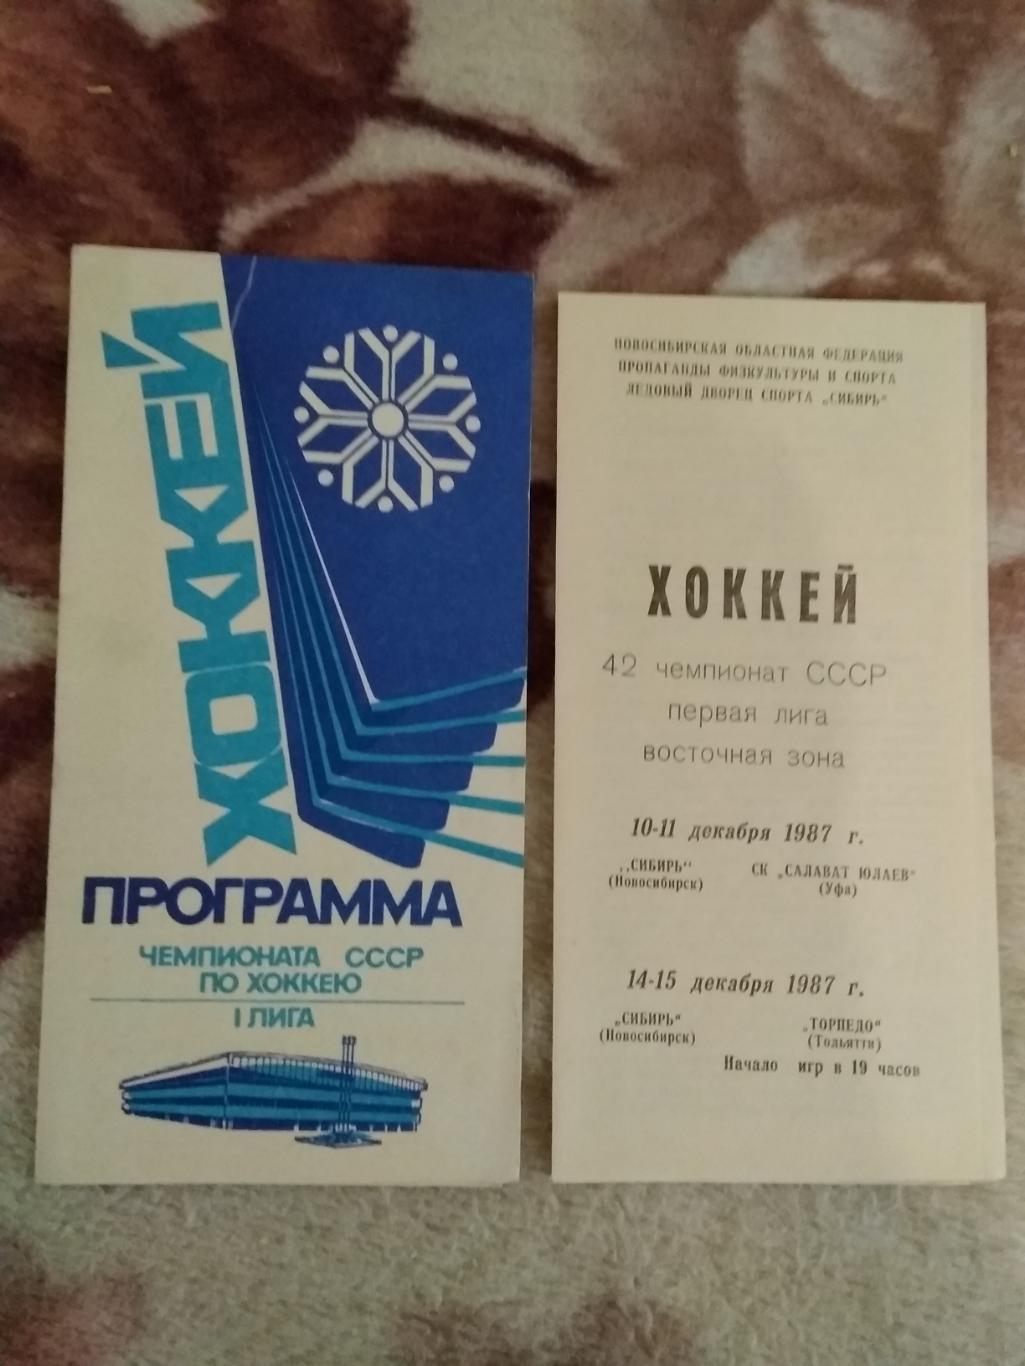 Сибирь (Новосибирск) - Салават Юлаев (Уфа),Торпедо (Тольятти) 10-15.12.1987.